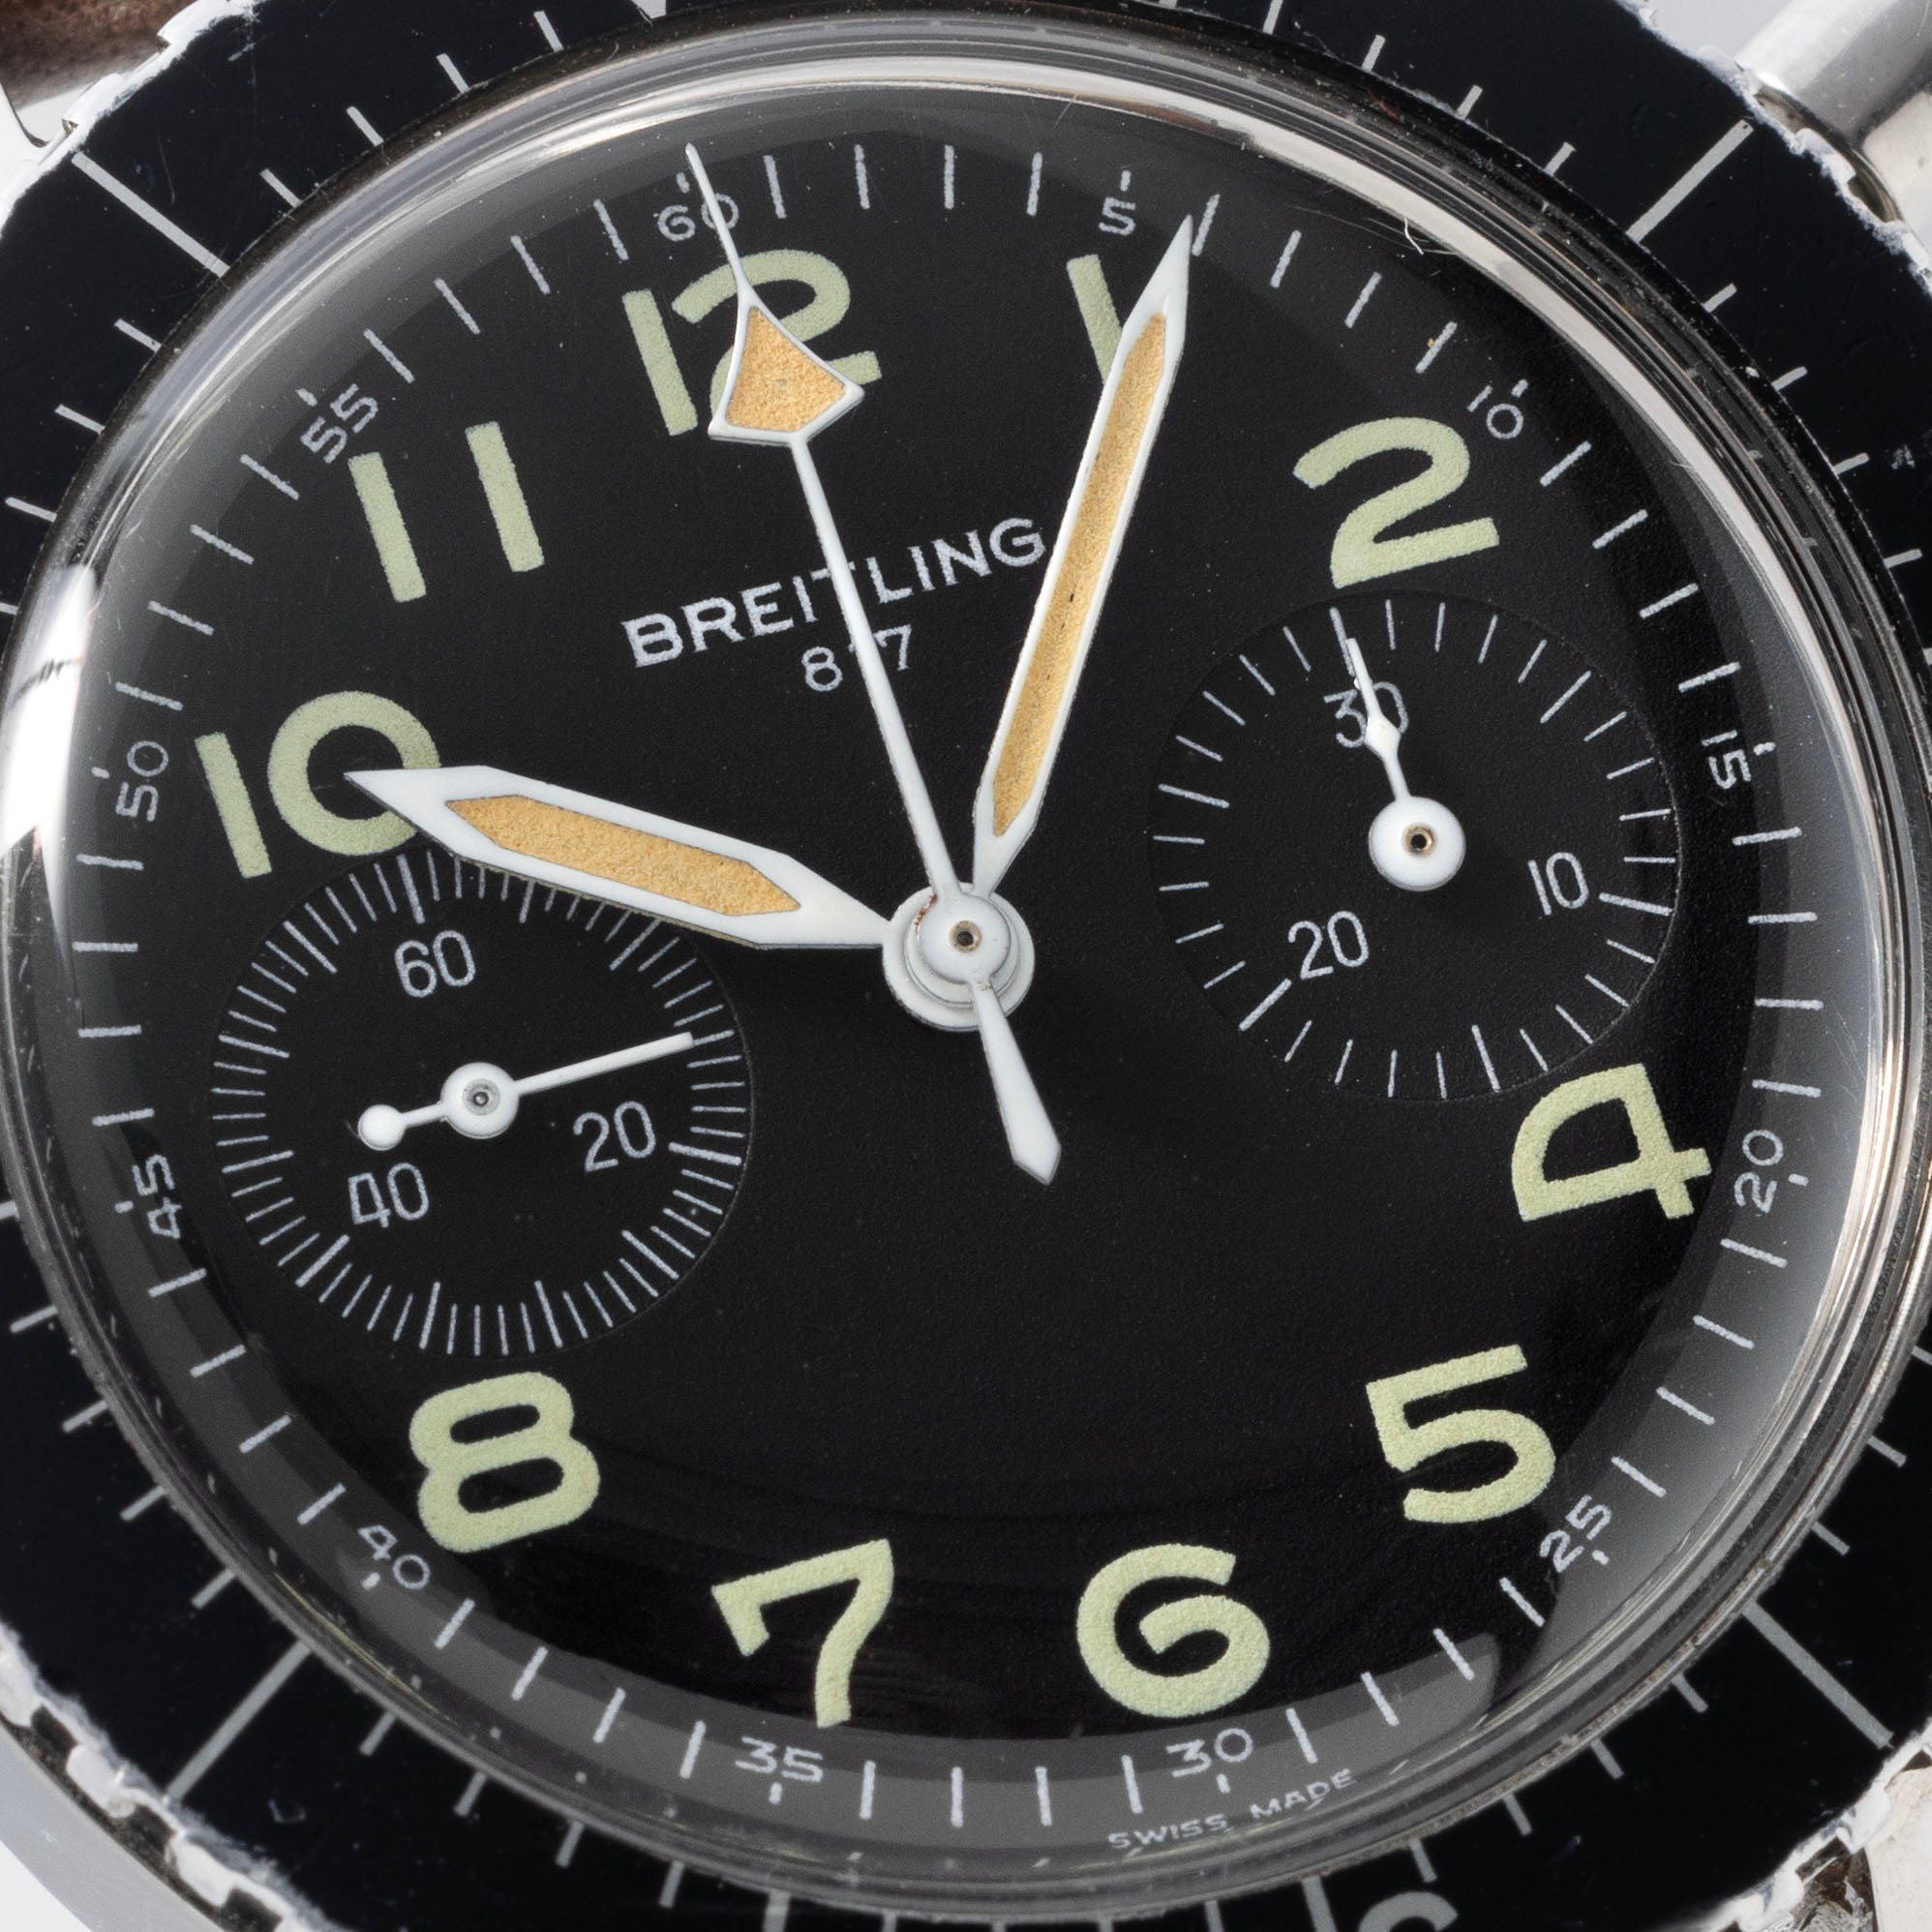  Breitling 817 Chronograph Italienische Armee